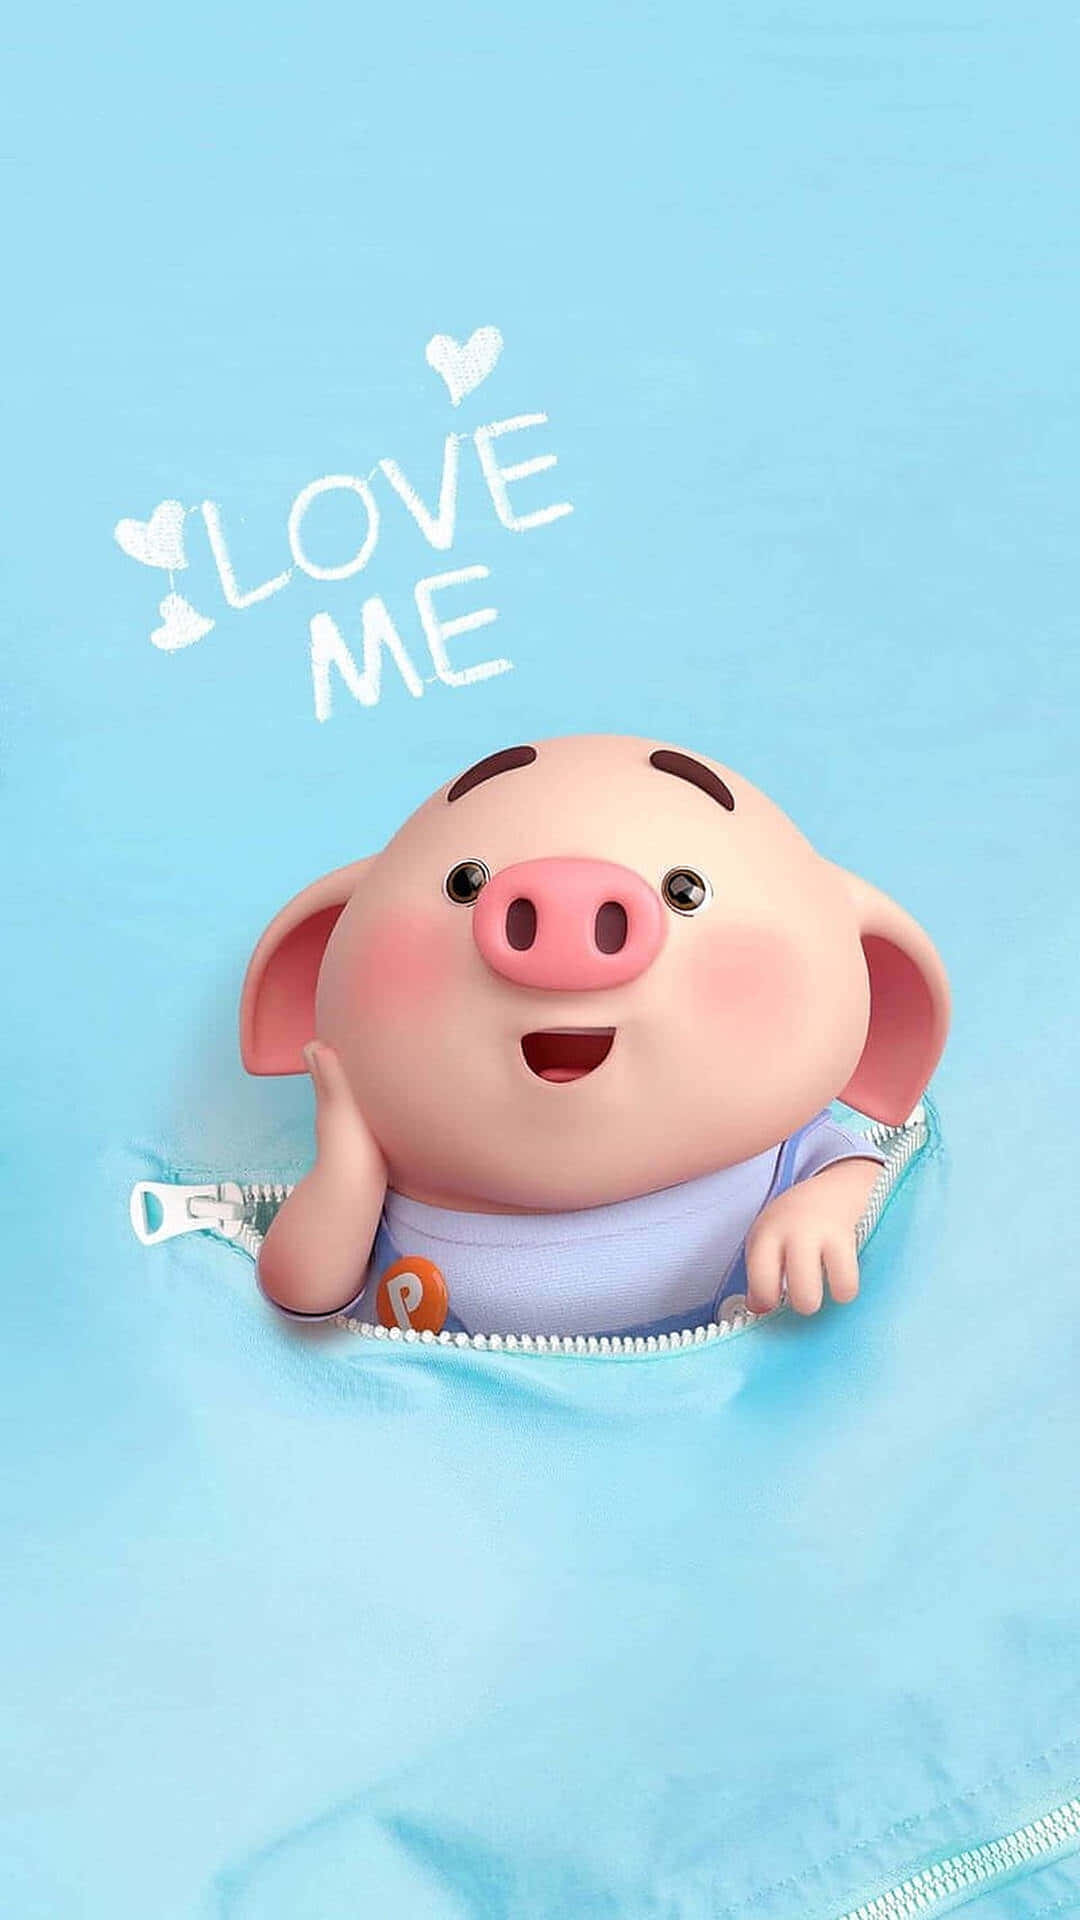 Cool Piggy In Pocket Wallpaper